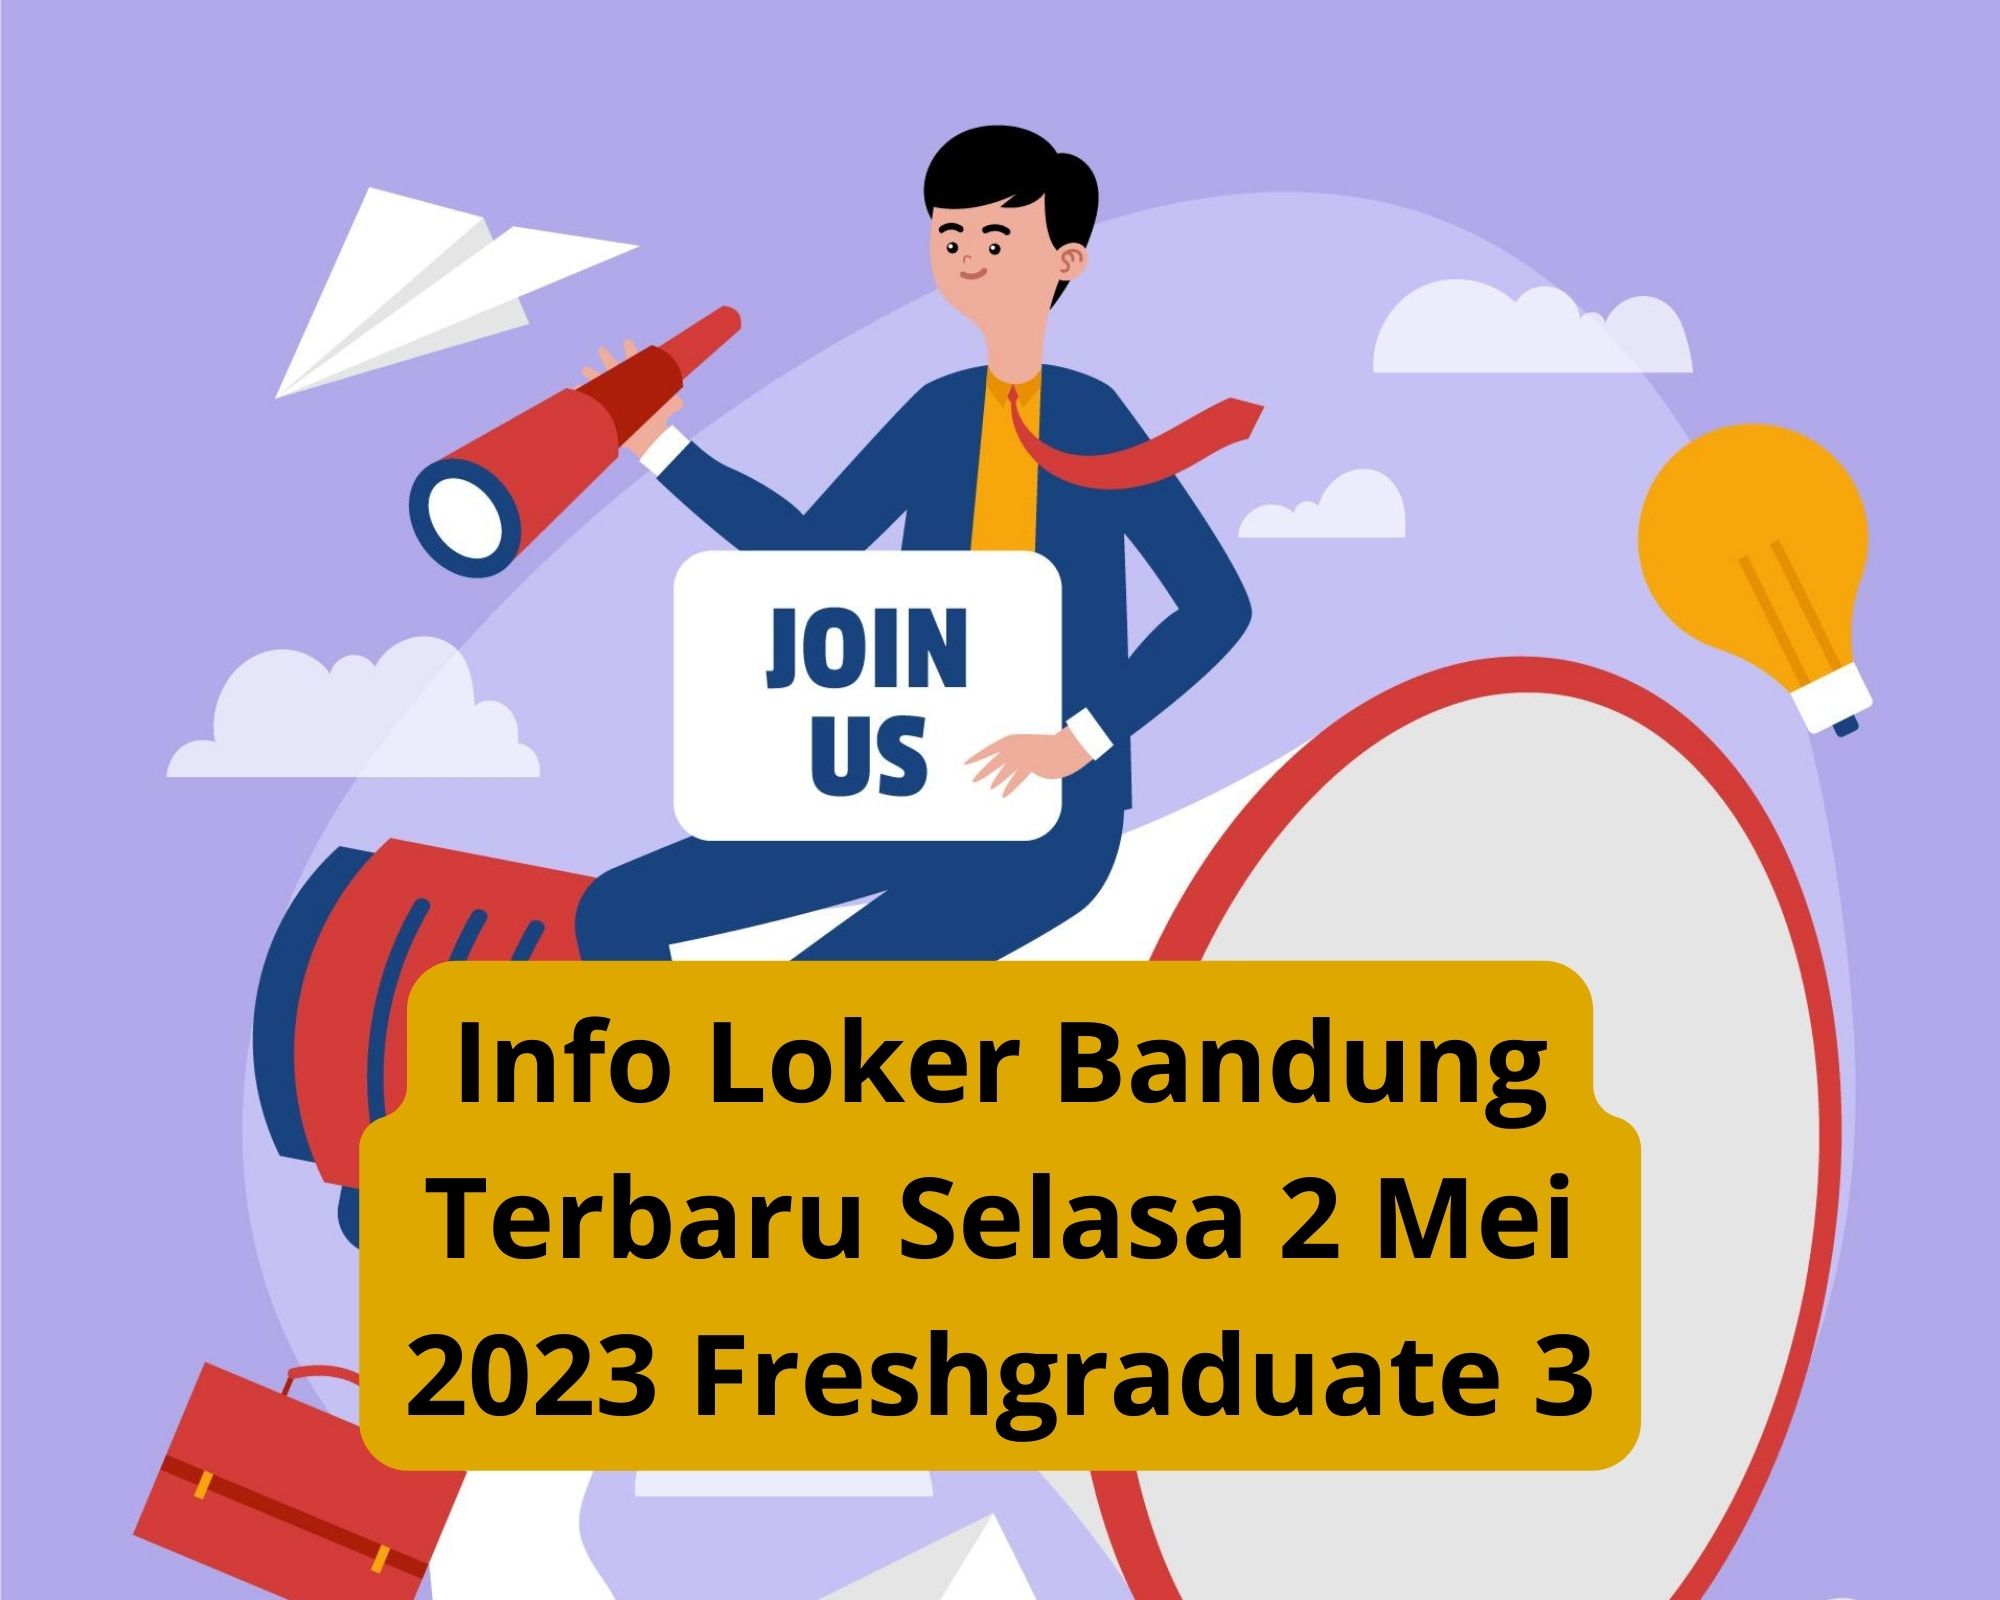 Info Loker Bandung Terbaru Selasa 2 Mei 2023 Freshgraduate 3